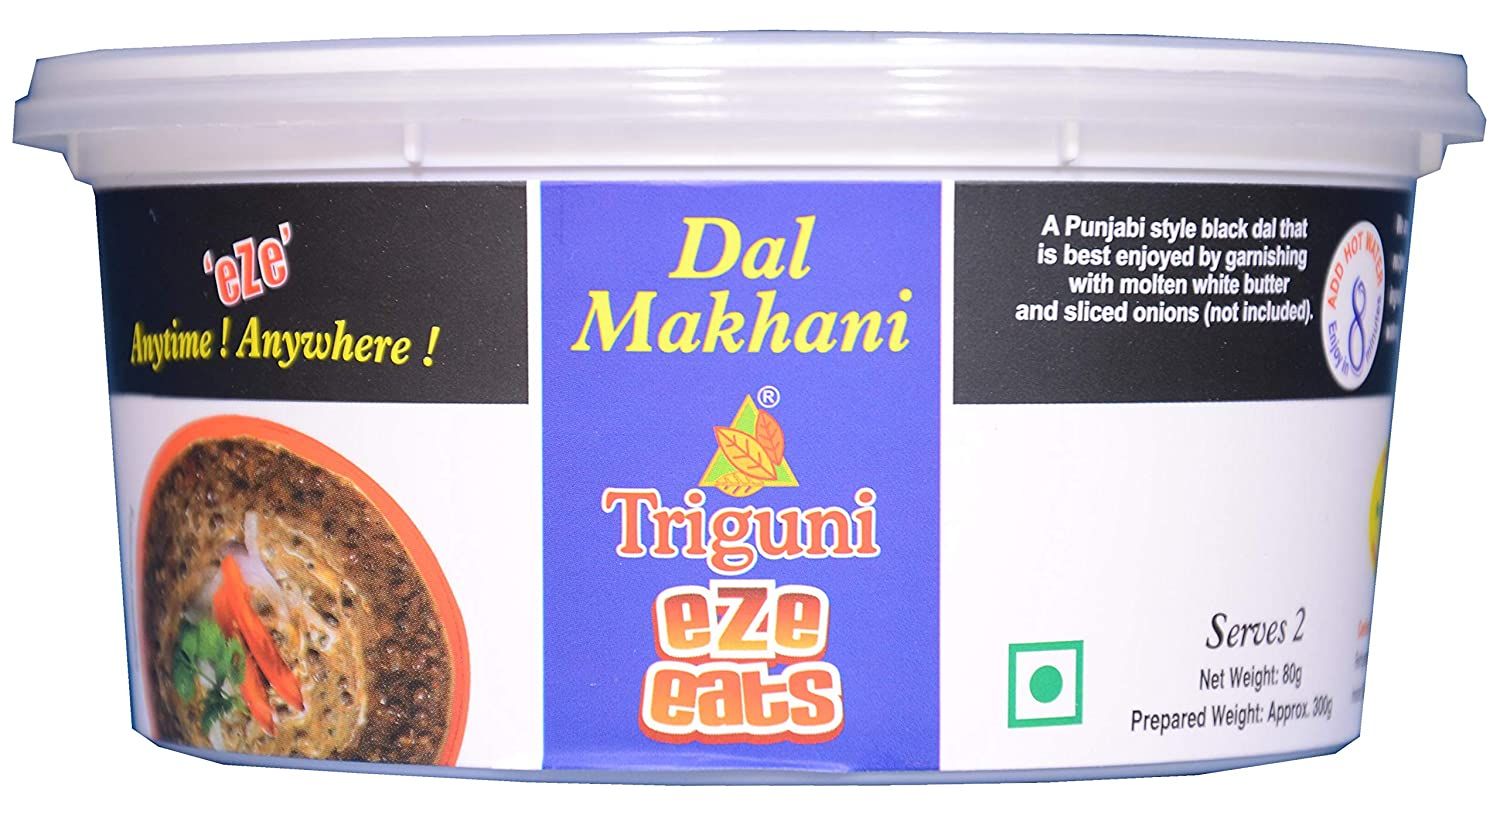 Triguni Eze Eats Dal Makhani Image